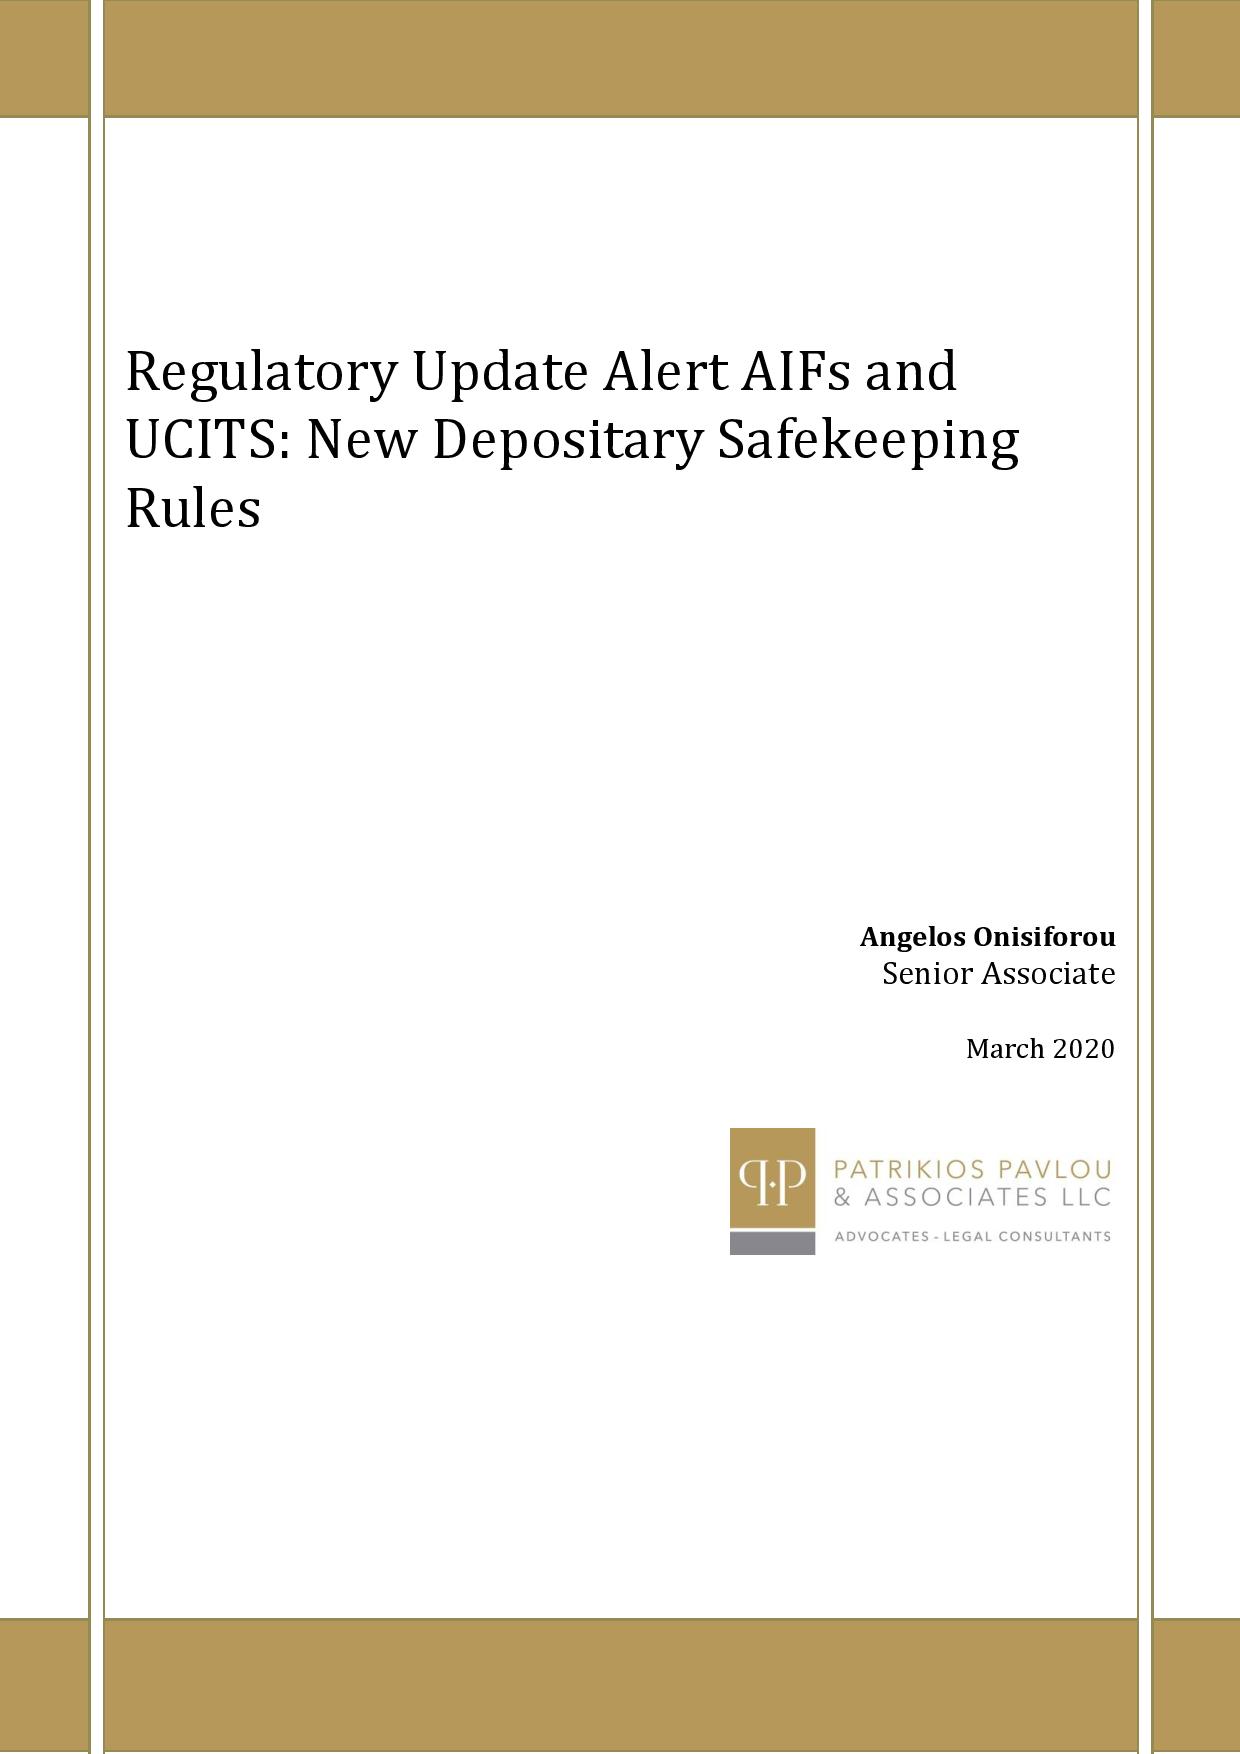 Patrikios Pavlou & Associates LLC: Regulatory Update Alert AIFs and UCITS: New Depositary Safekeeping Rules